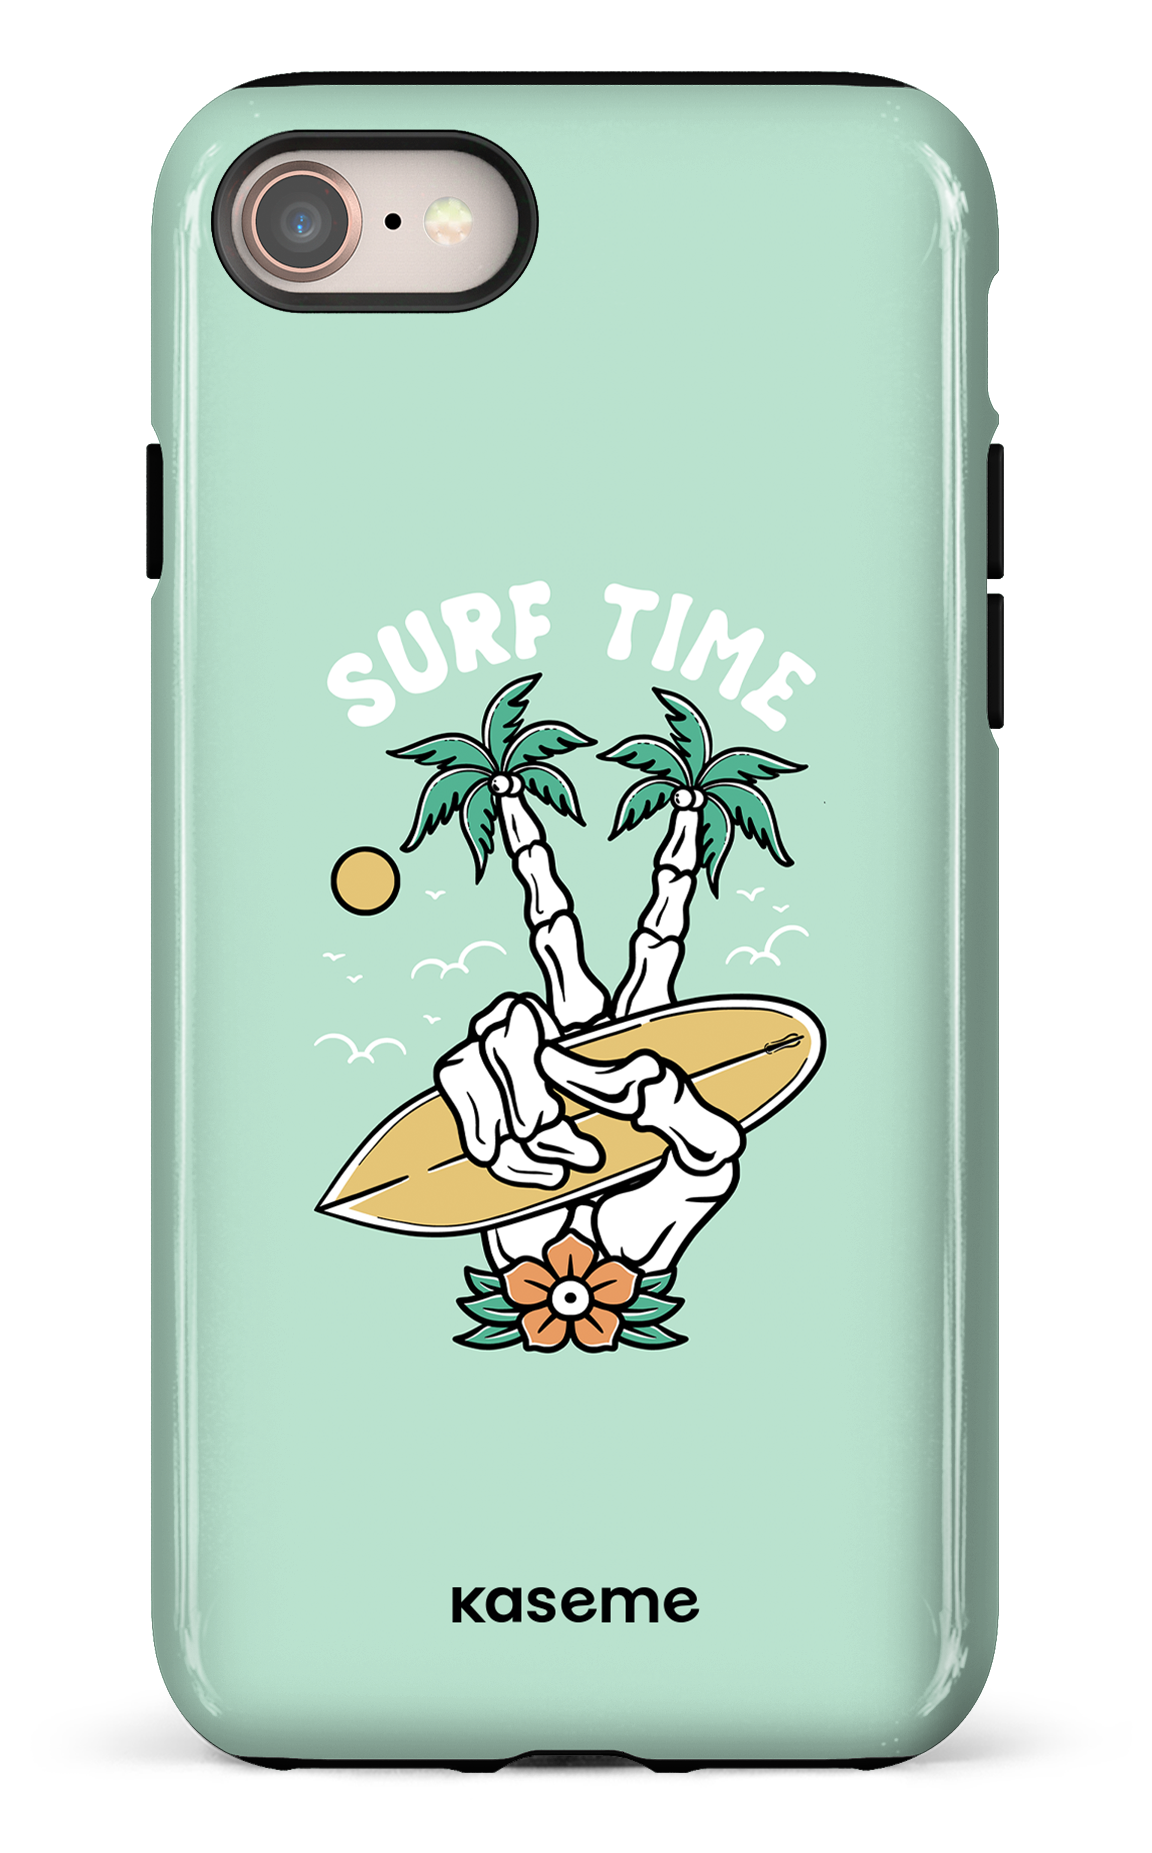 Surfboard - iPhone 7